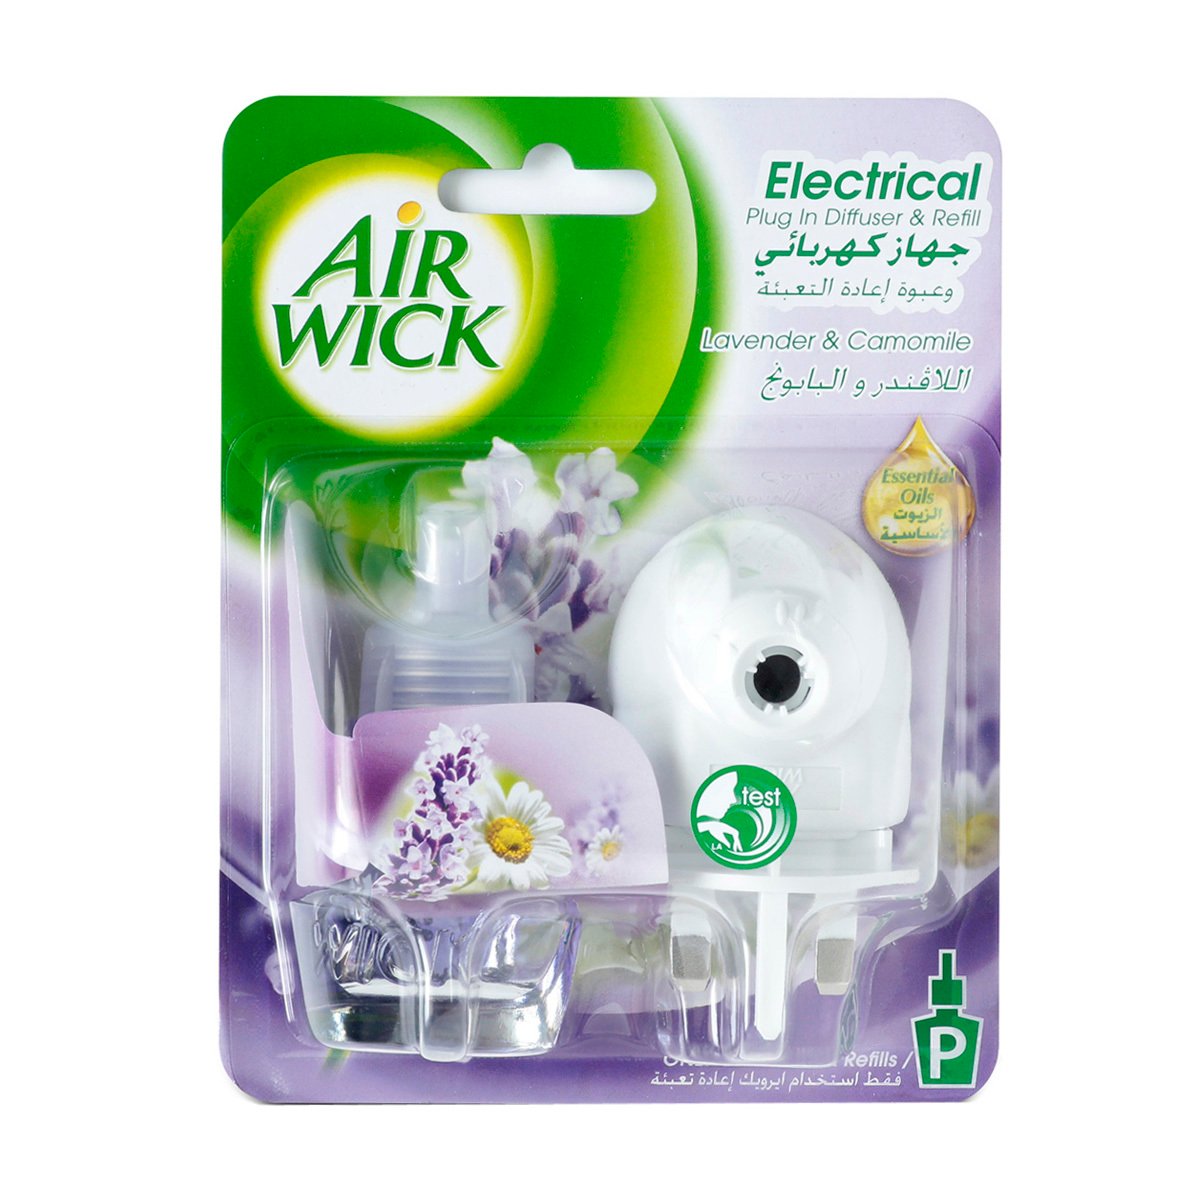 Airwick Electrical Plug In Diffuser & Refill Lavender & Camomile 19 ml